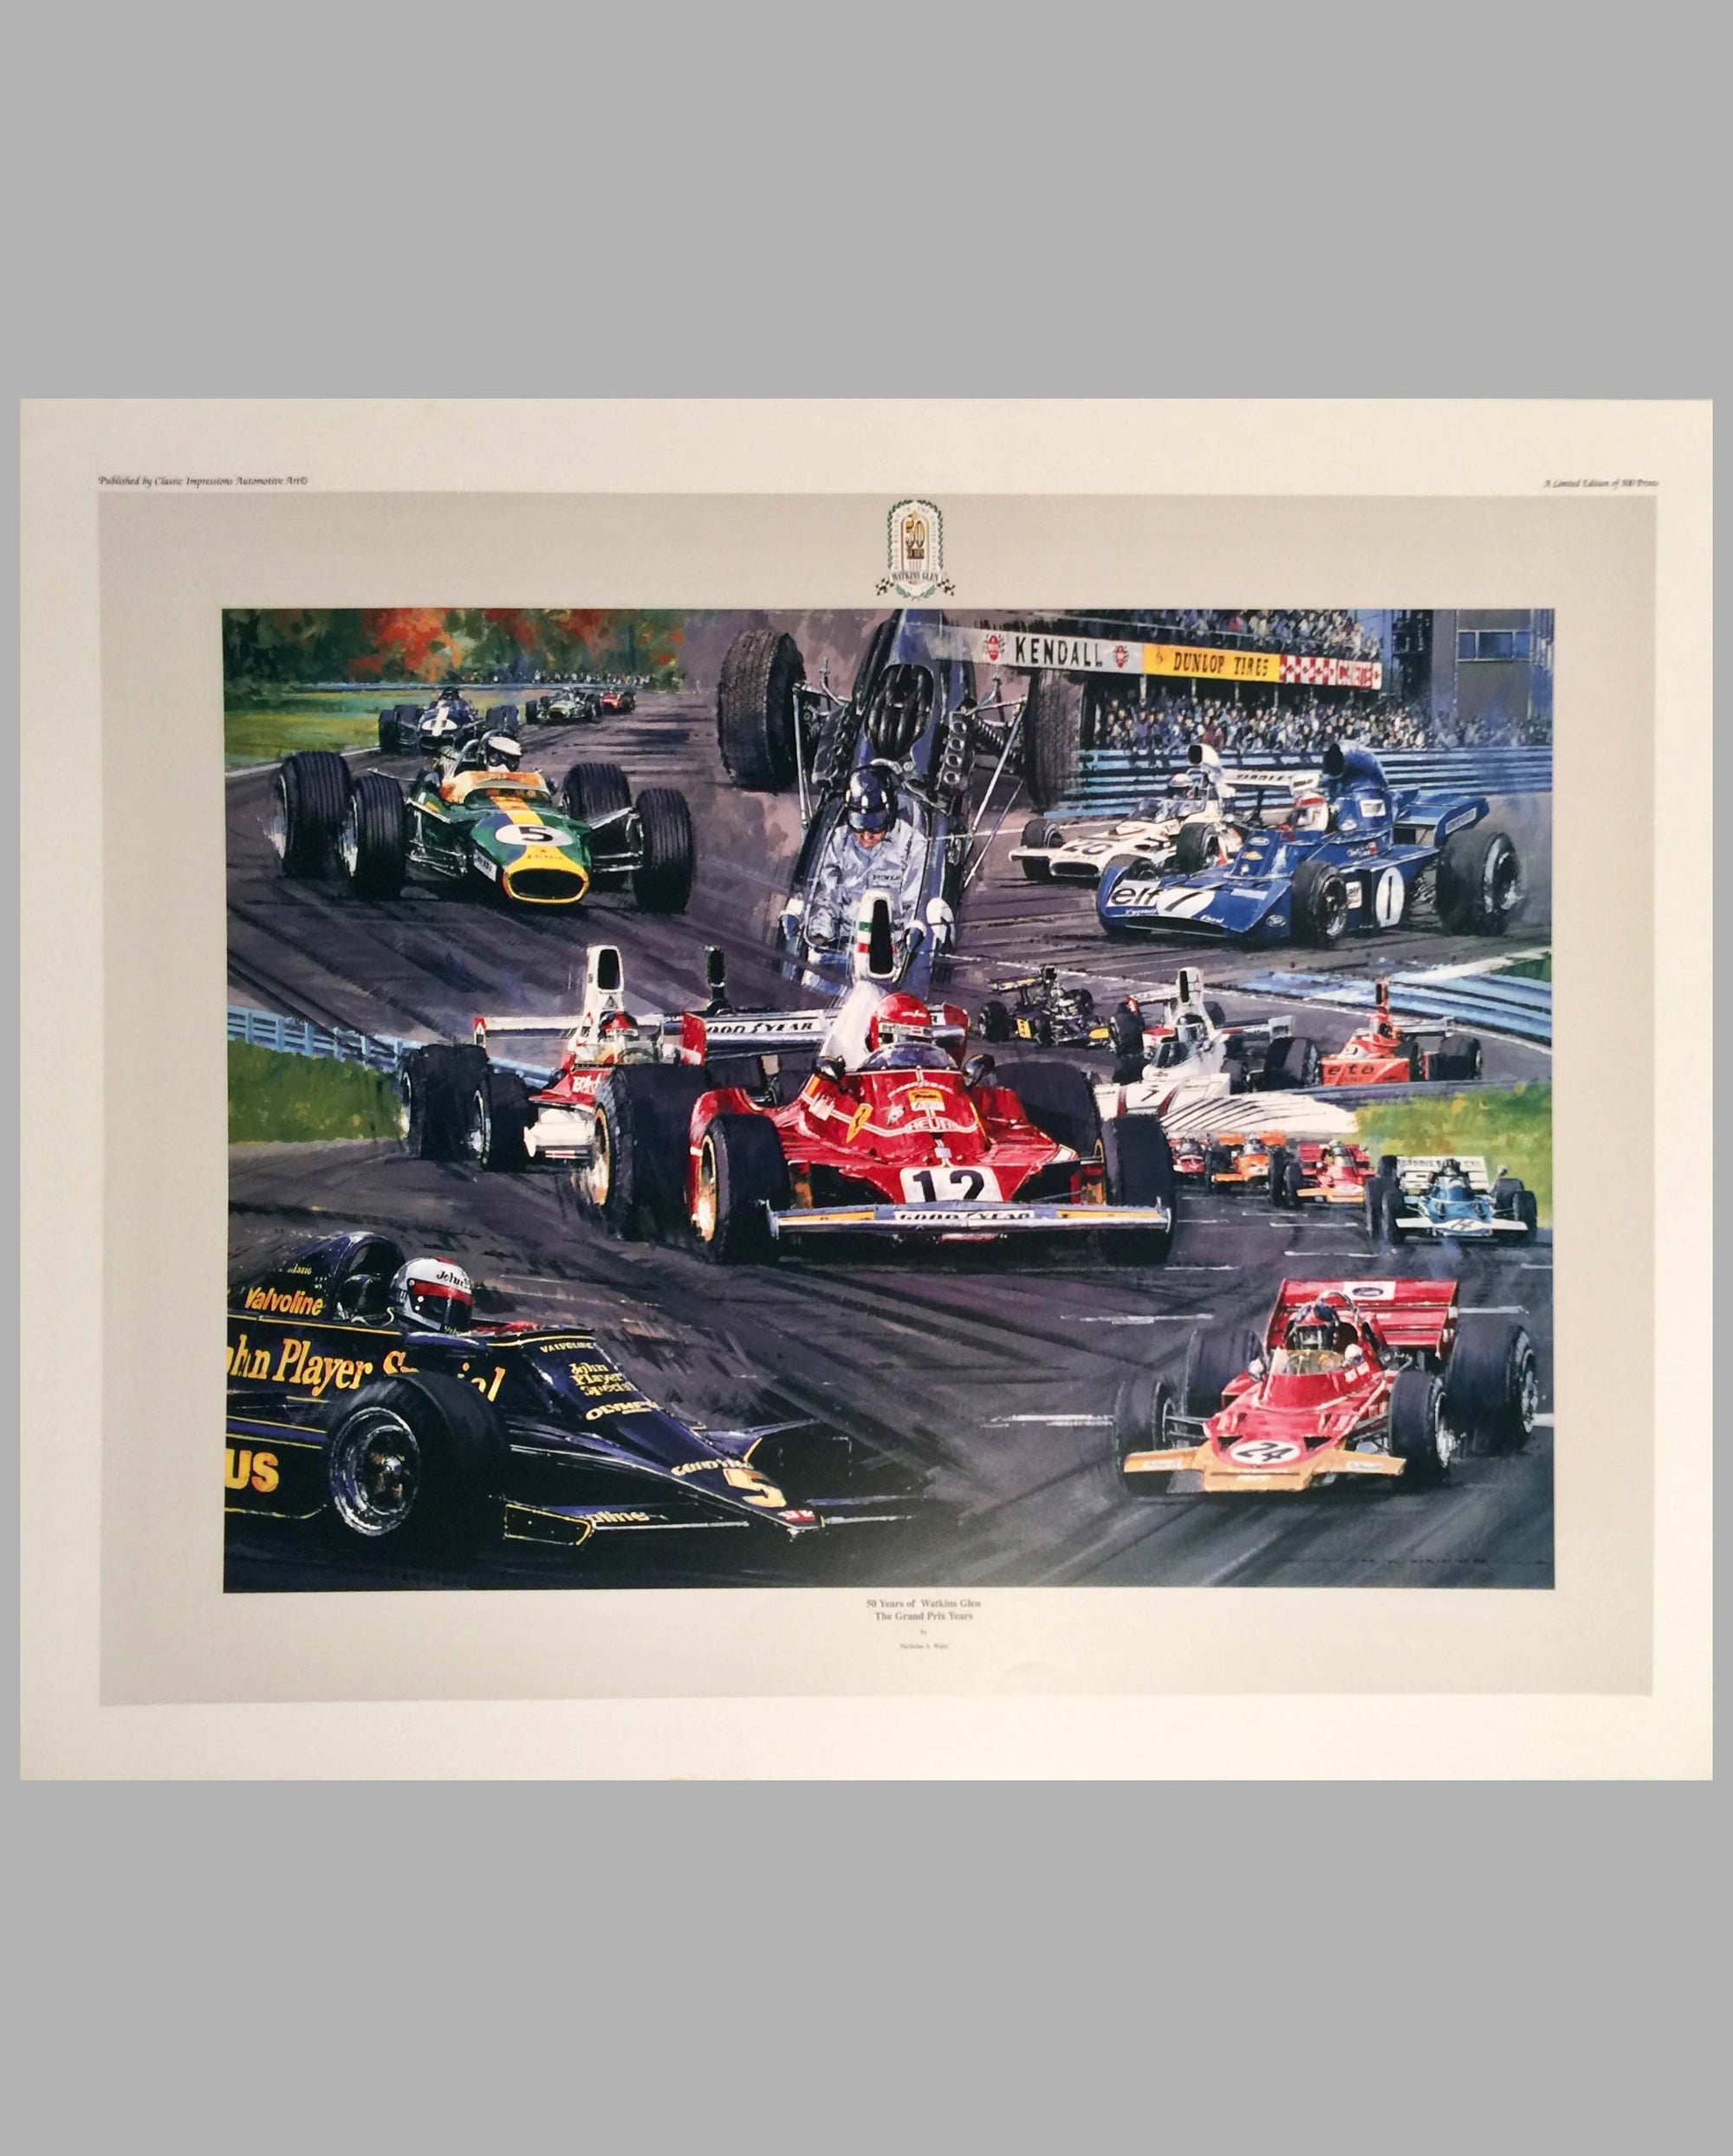 50 Years of Watkins Glen - The Grand Prix Years print by Nicholas Watts, 1998